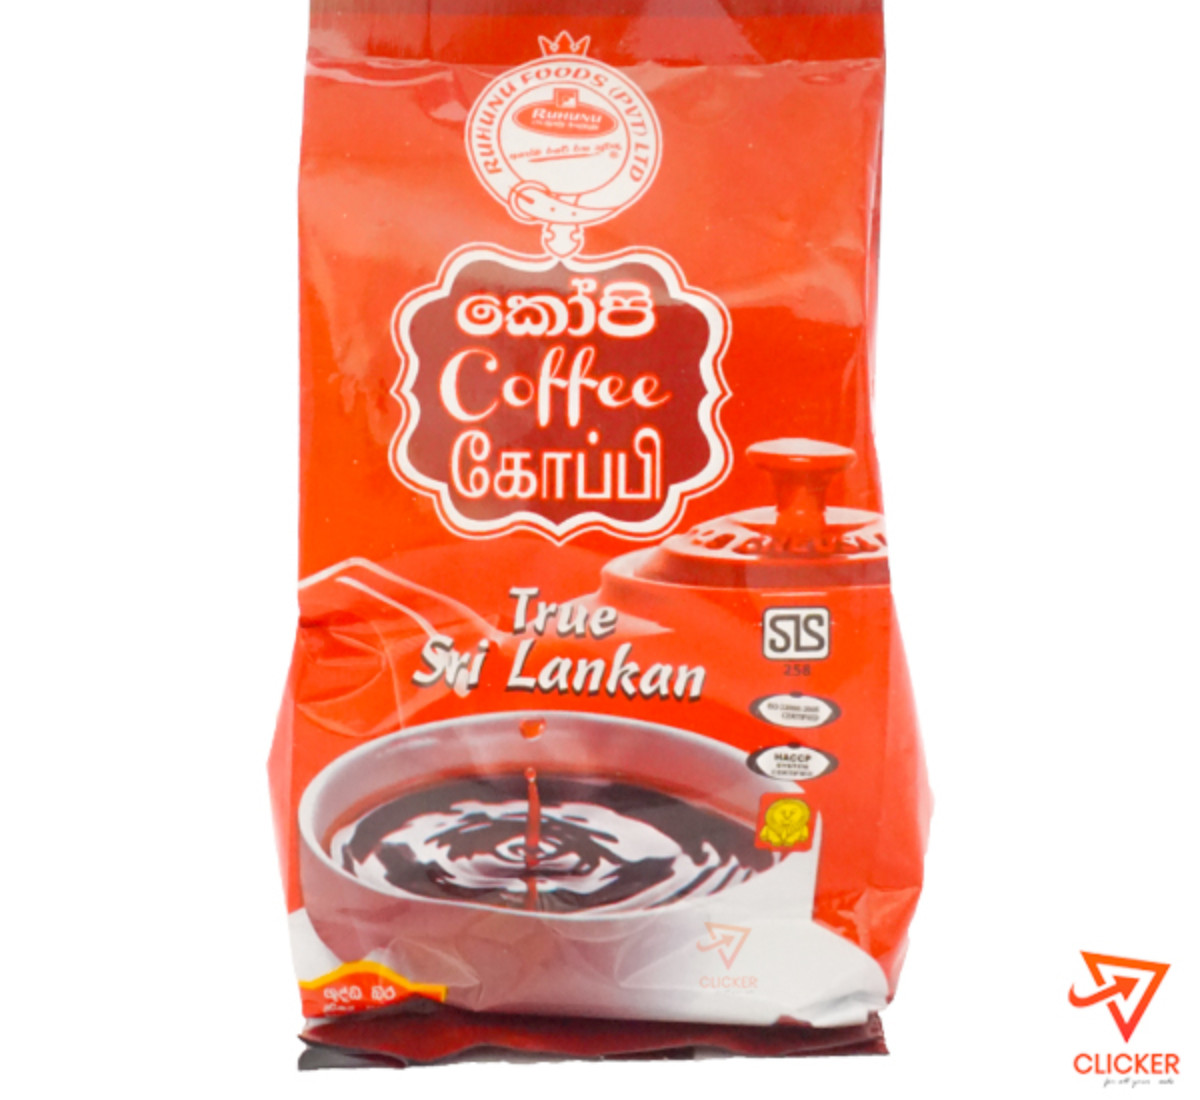 Clicker product 50g RUHUNU coffee 982